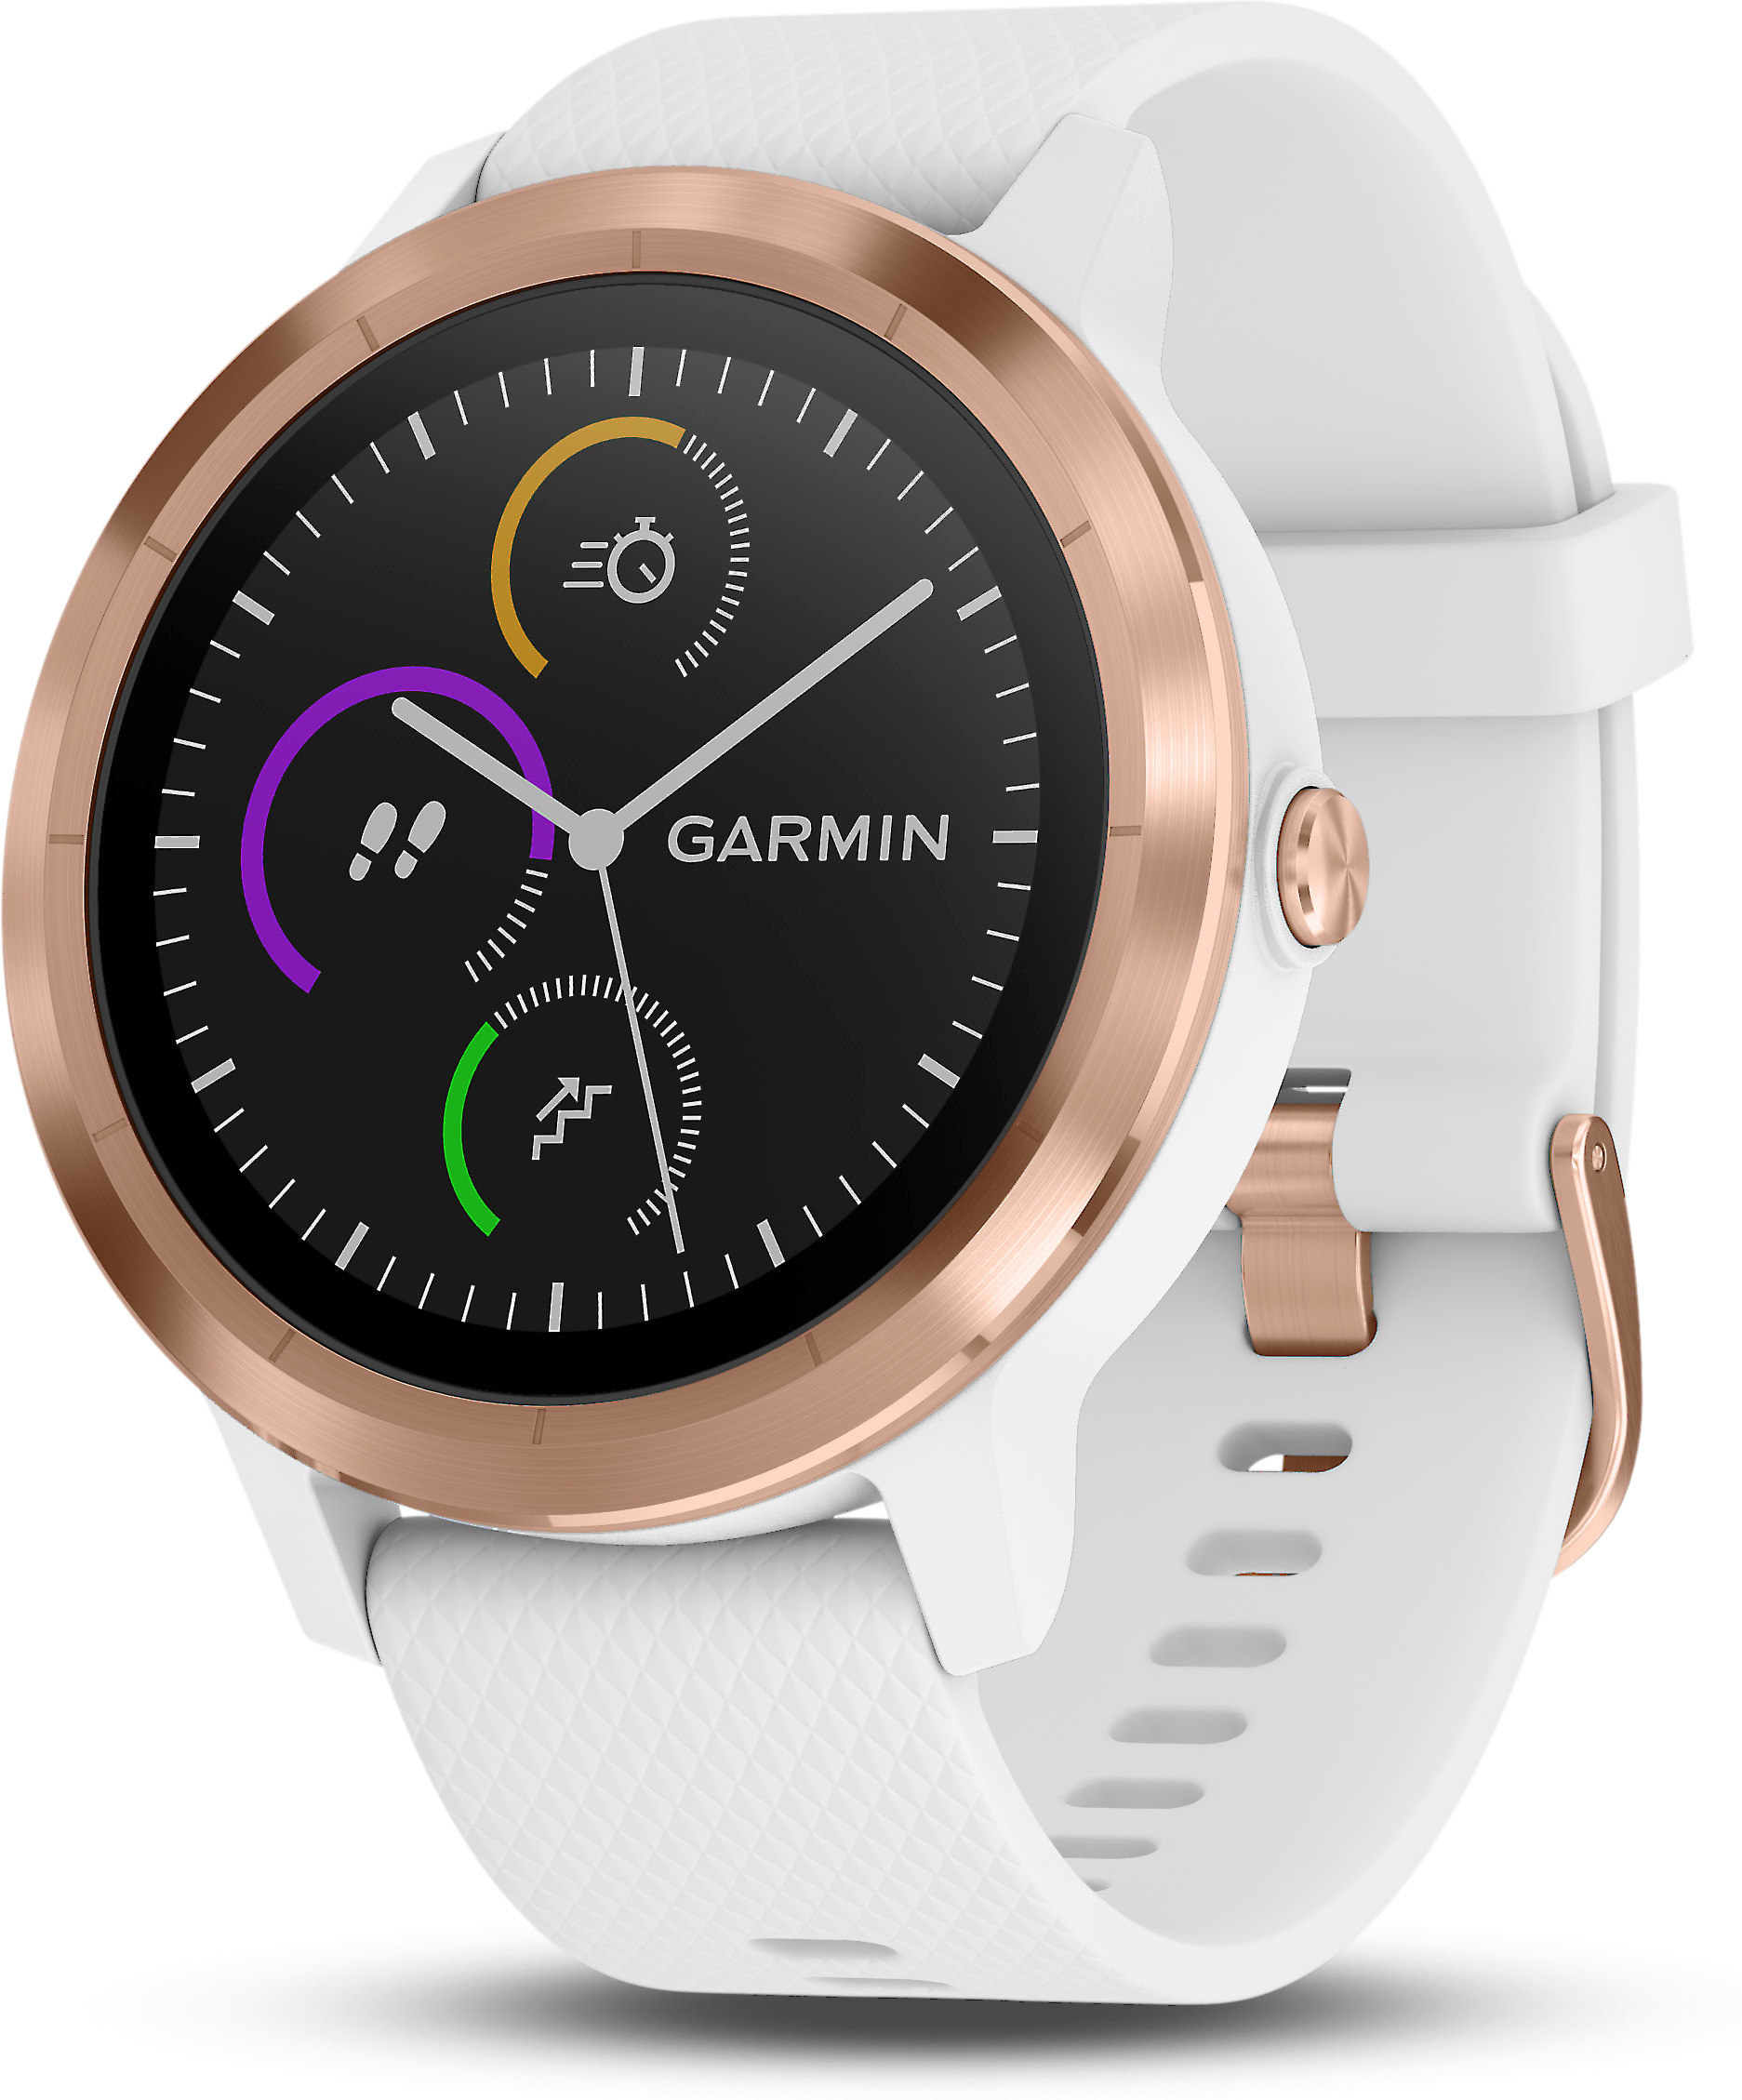 garmin smartwatch rose gold